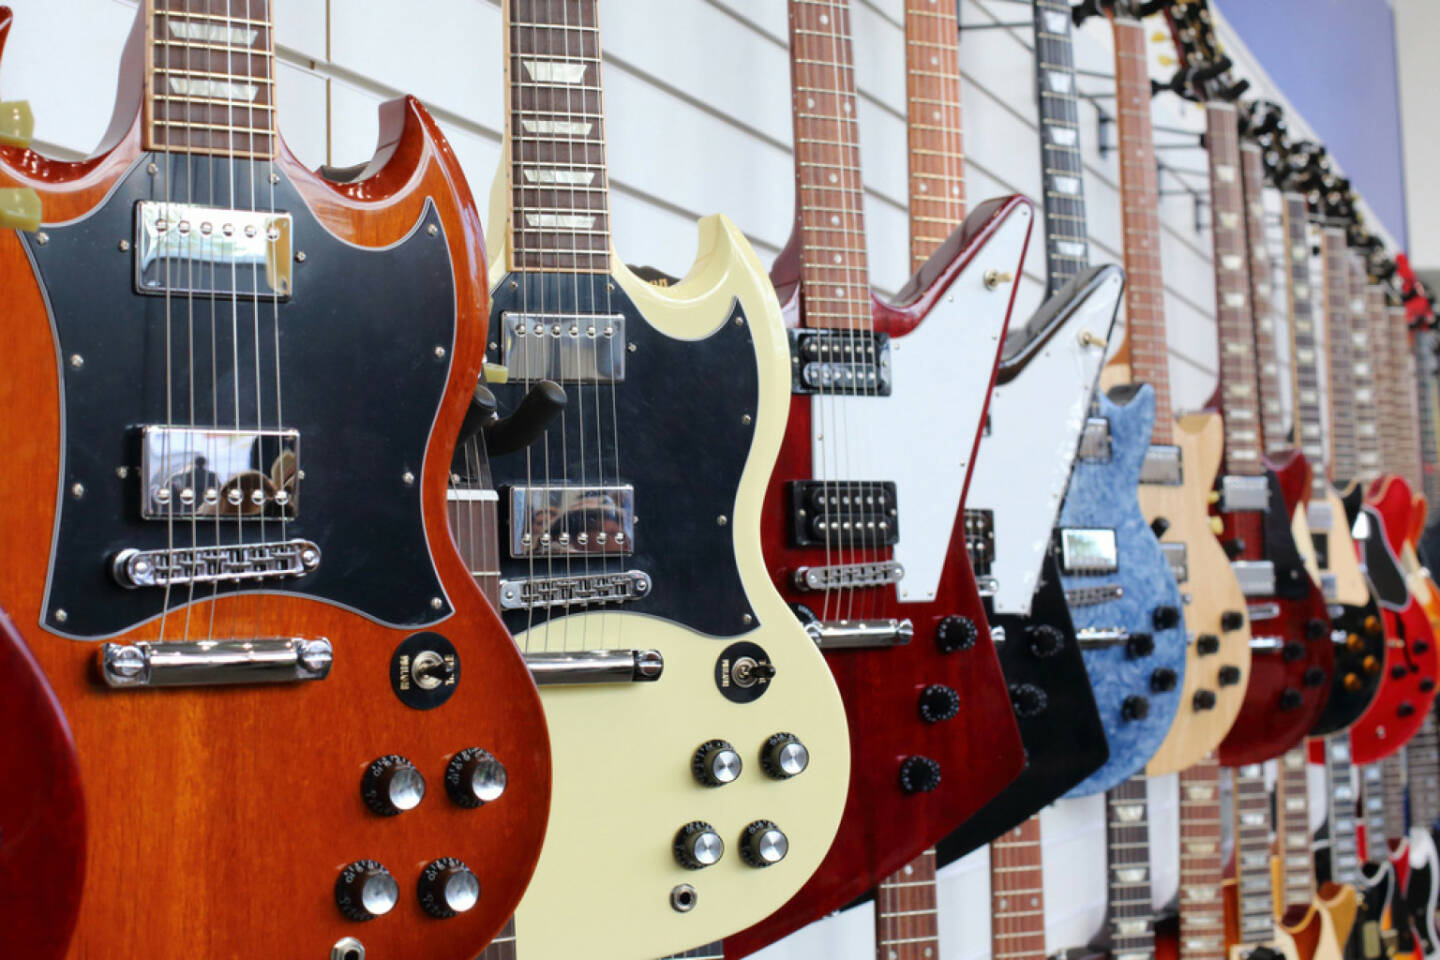 Gitarre, E-Gitarre, Musik, http://www.shutterstock.com/de/pic-141945250/stock-photo-many-electric-guitars-hanging-on-wall-in-the-shop.html 